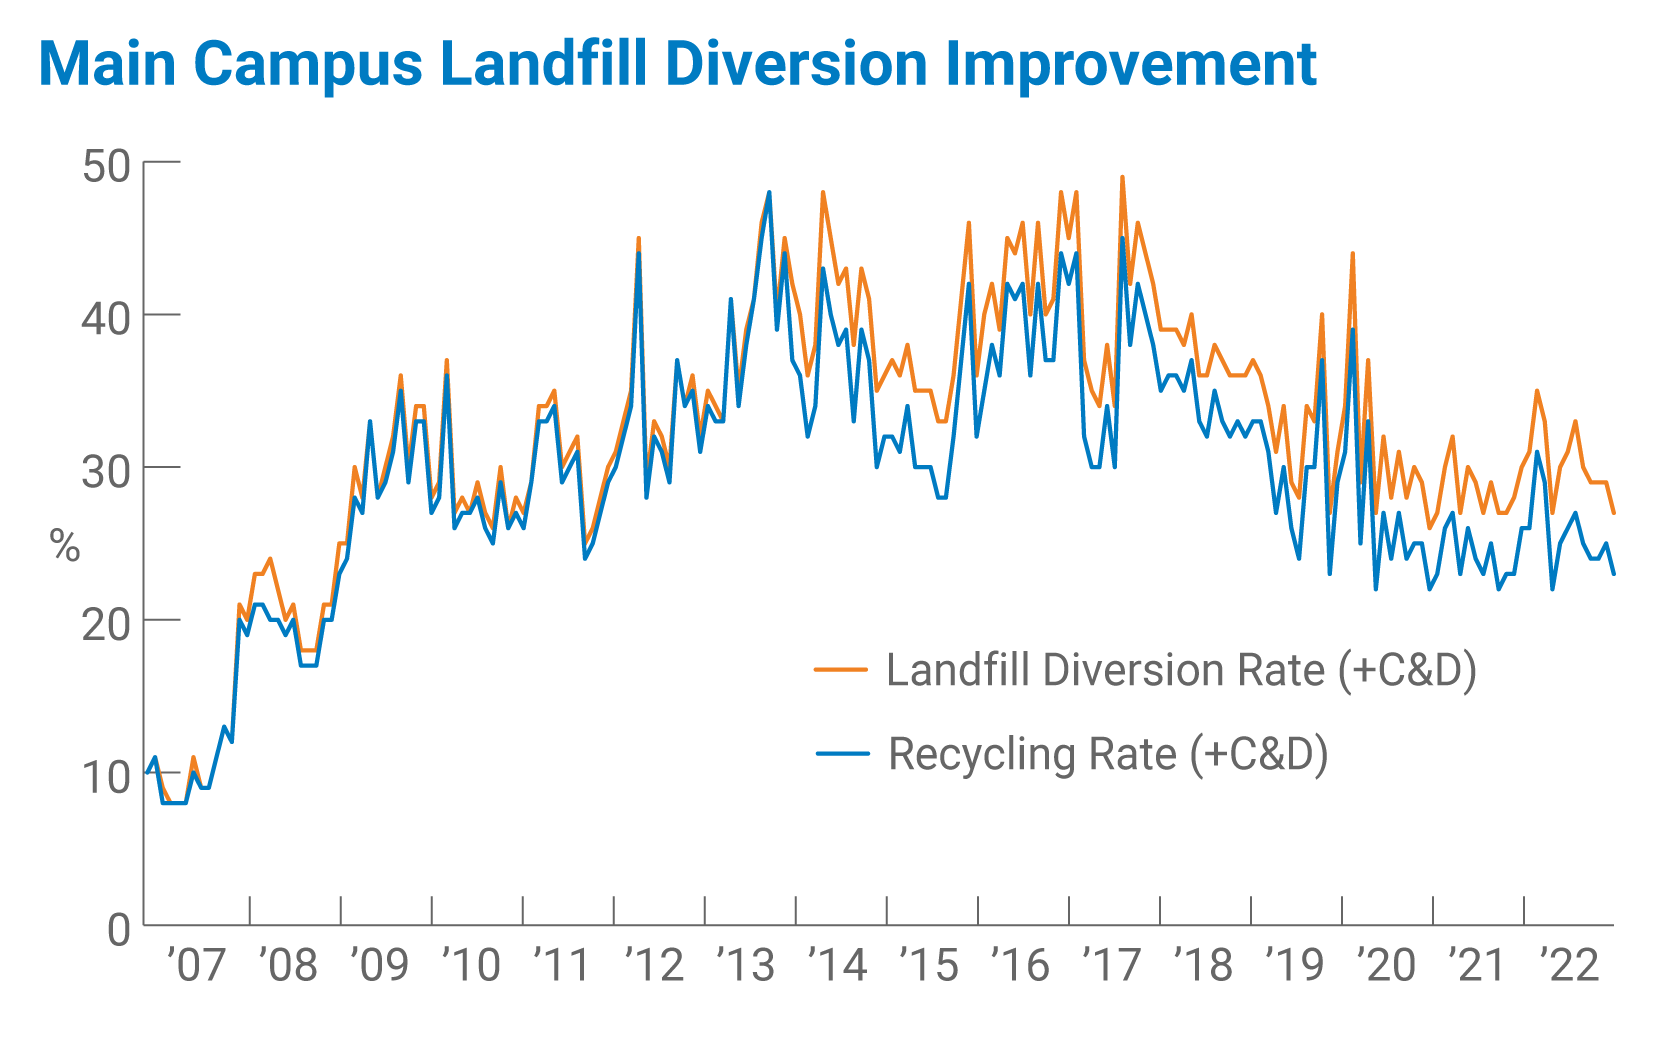 Main campus landfill diversion improvement